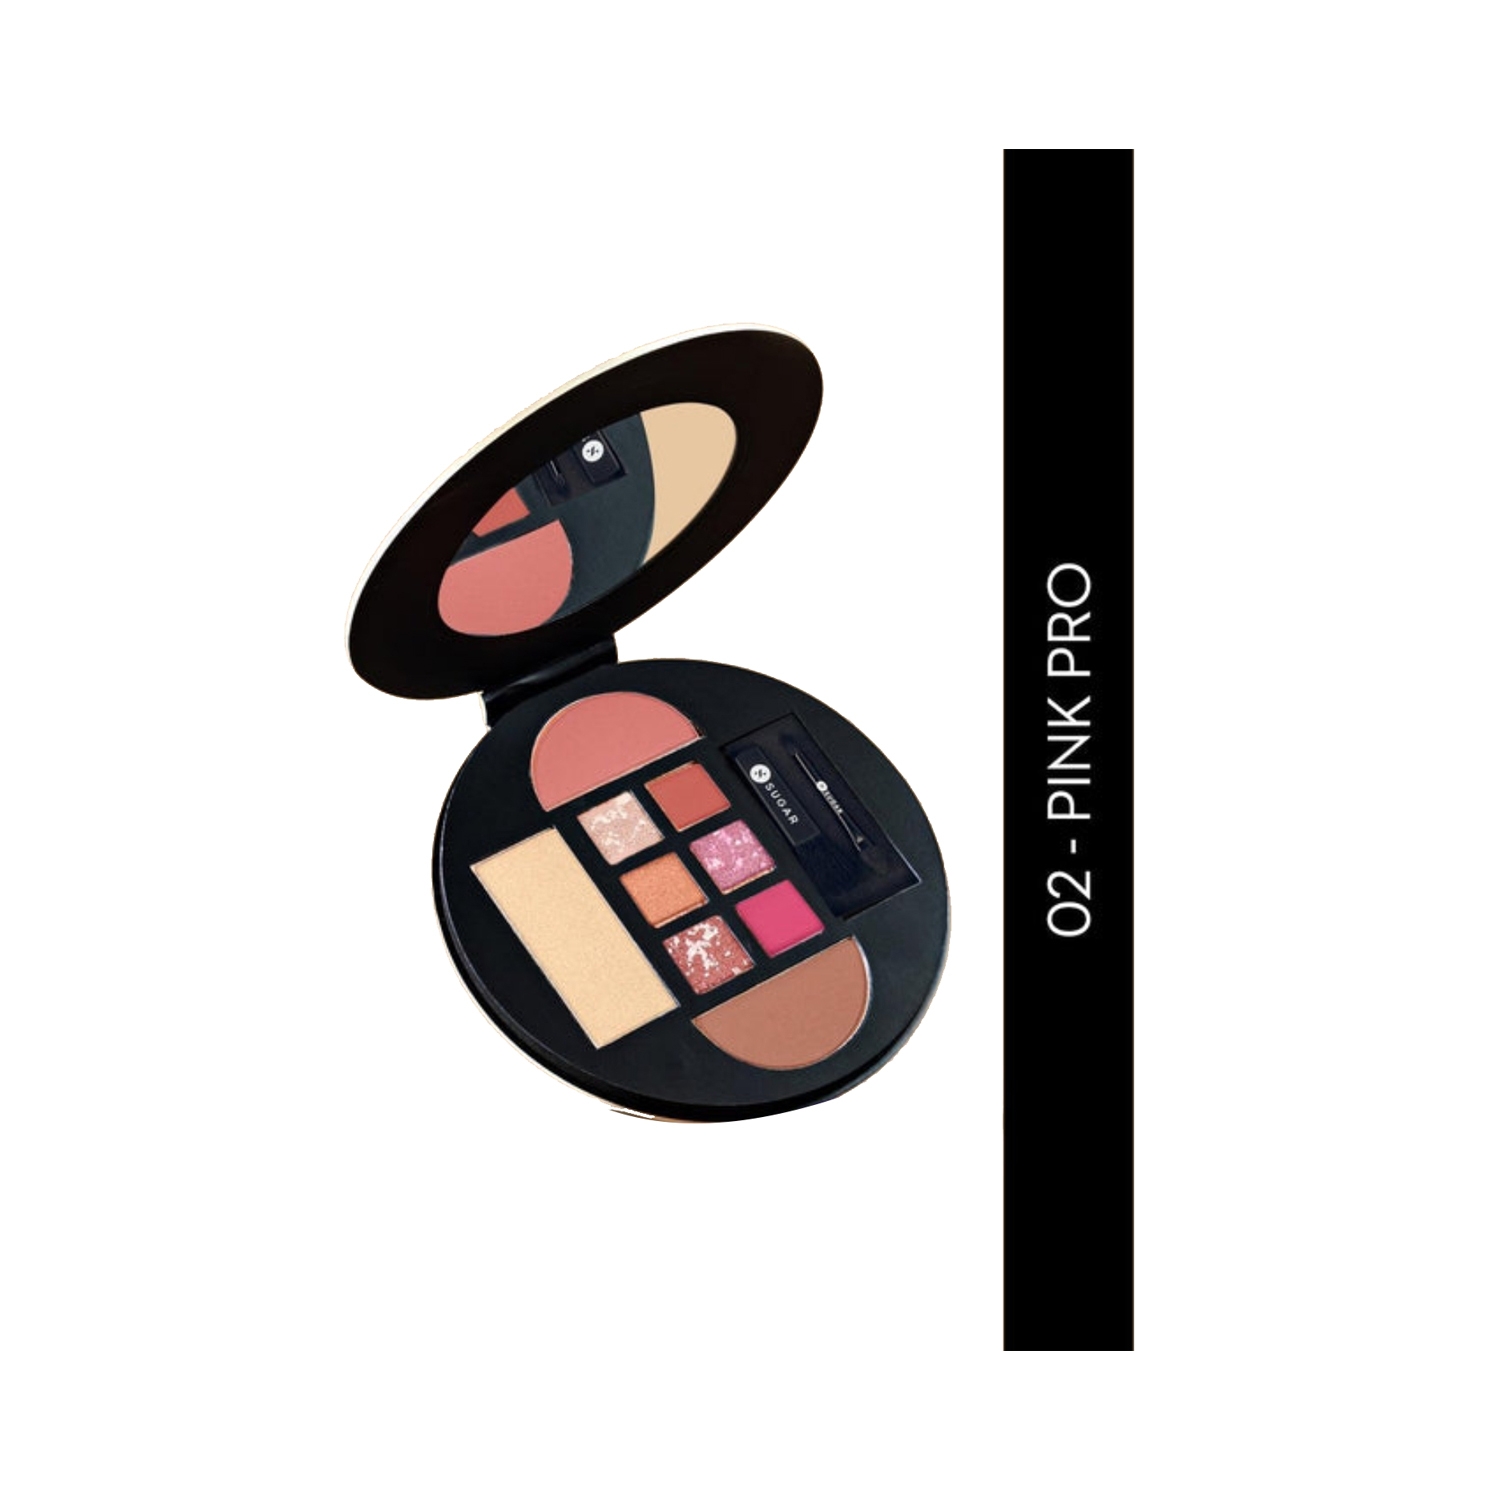 SUGAR Cosmetics Contour De Force Eyes And Face Palette - 02 Pink Pro (20.3g)